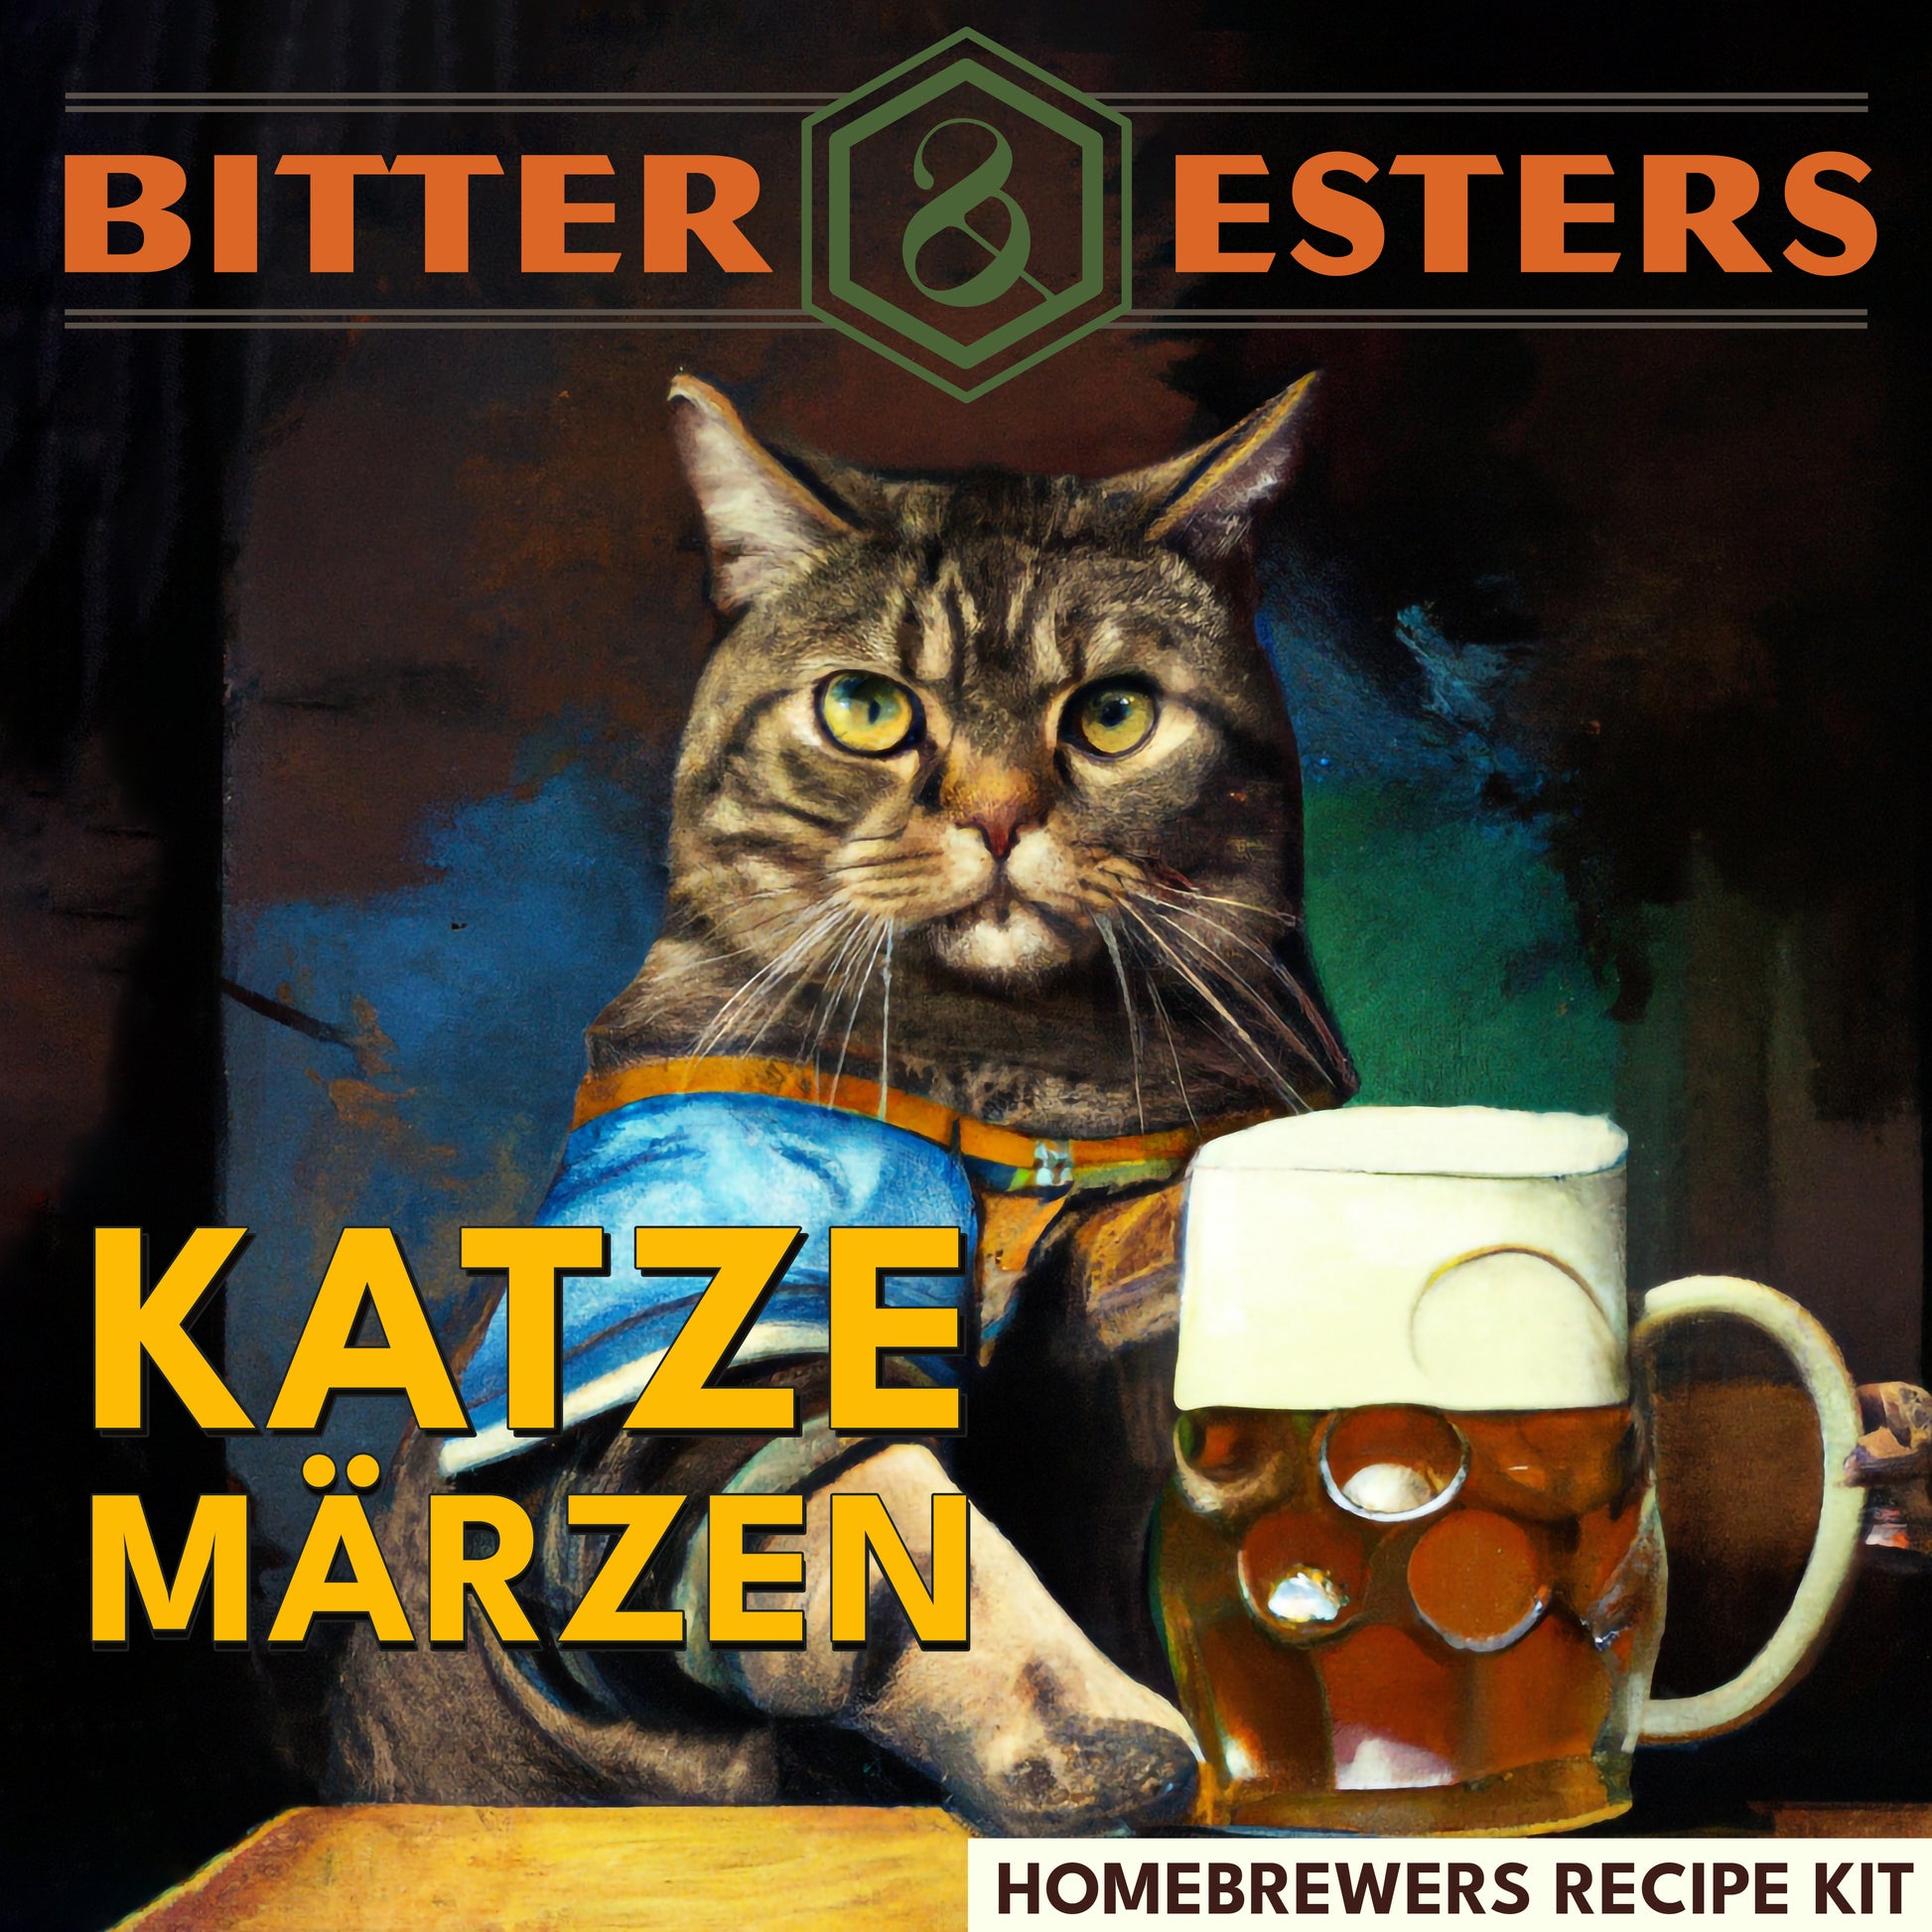 Katze Marzen Octoberfest  - Homebrewers Recipe Kit